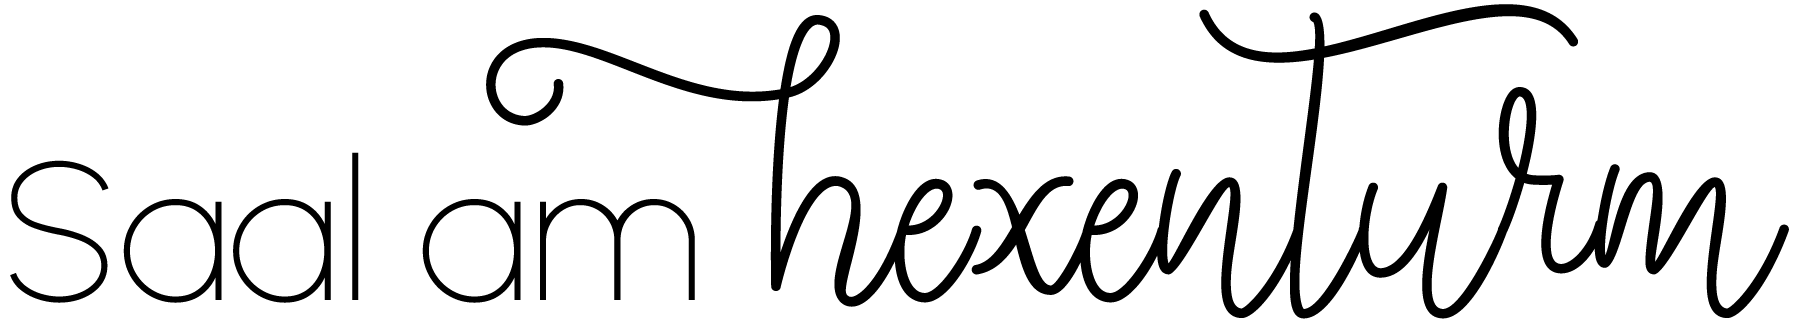 Saal am Hexenturm_Logo 2